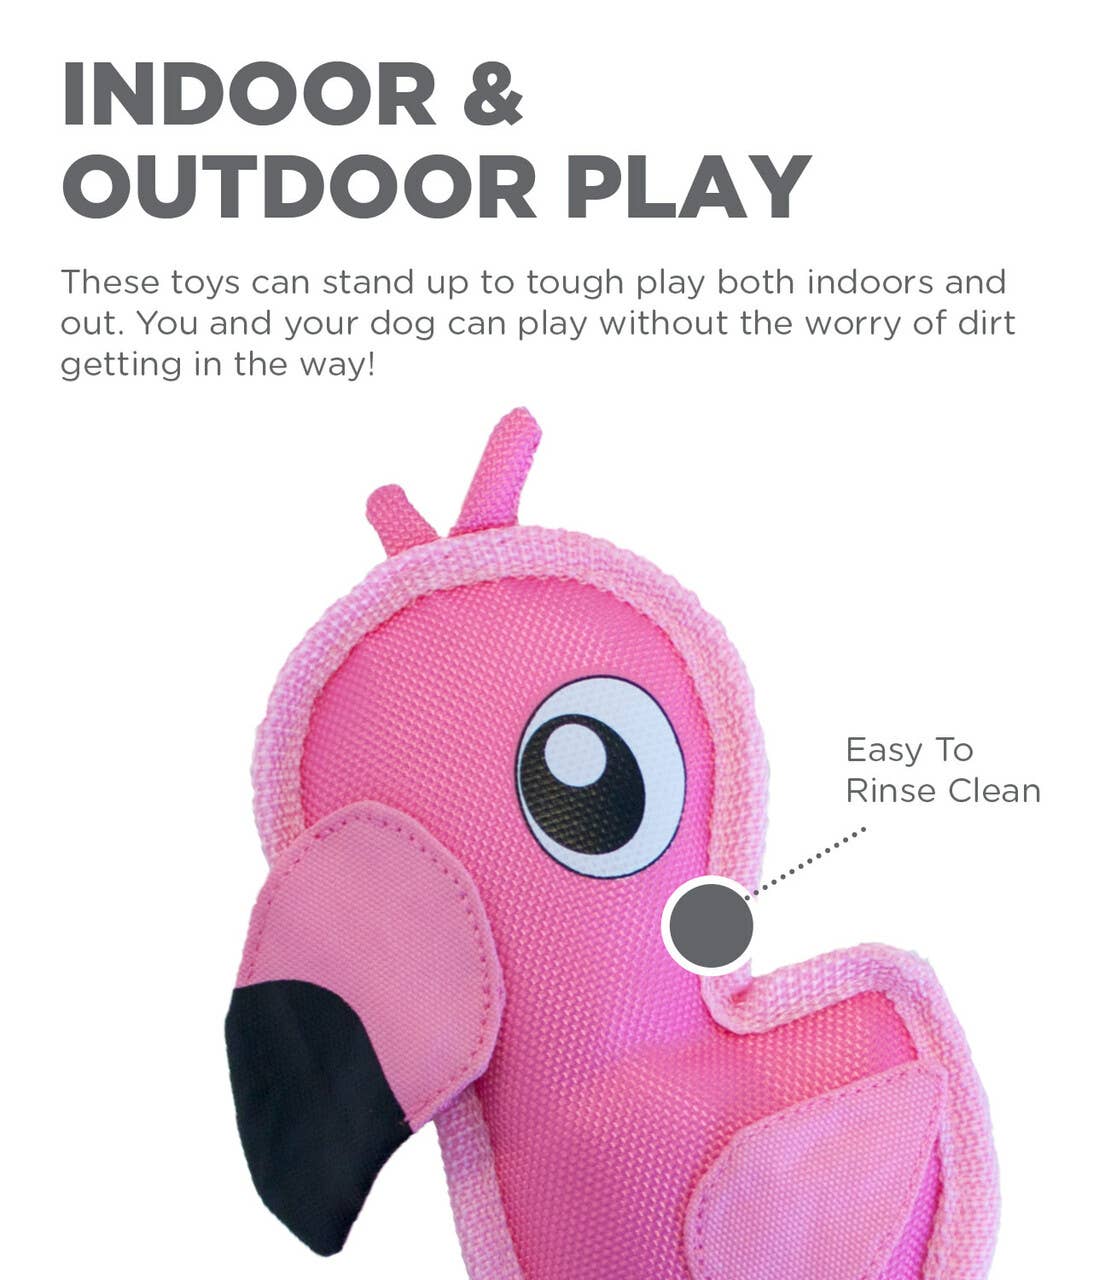 Outward Hound Fire Biterz Flamingo Durable Dog Toy Pink SM - Happy Hounds Pet Supply